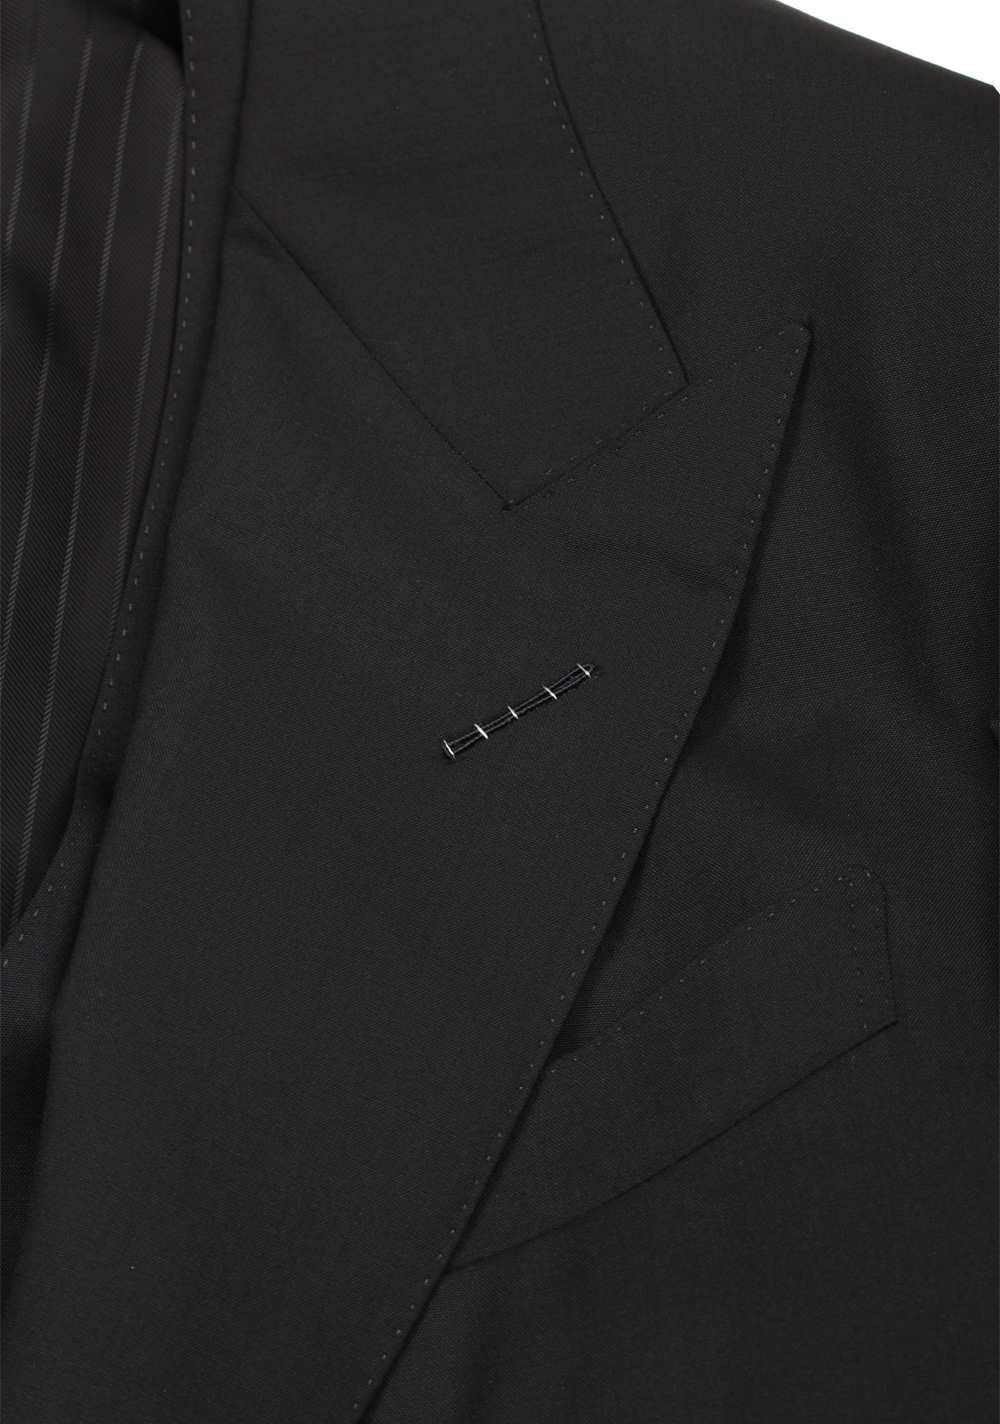 TOM FORD Windsor Signature Solid Black 3 Piece Suit | Costume Limité